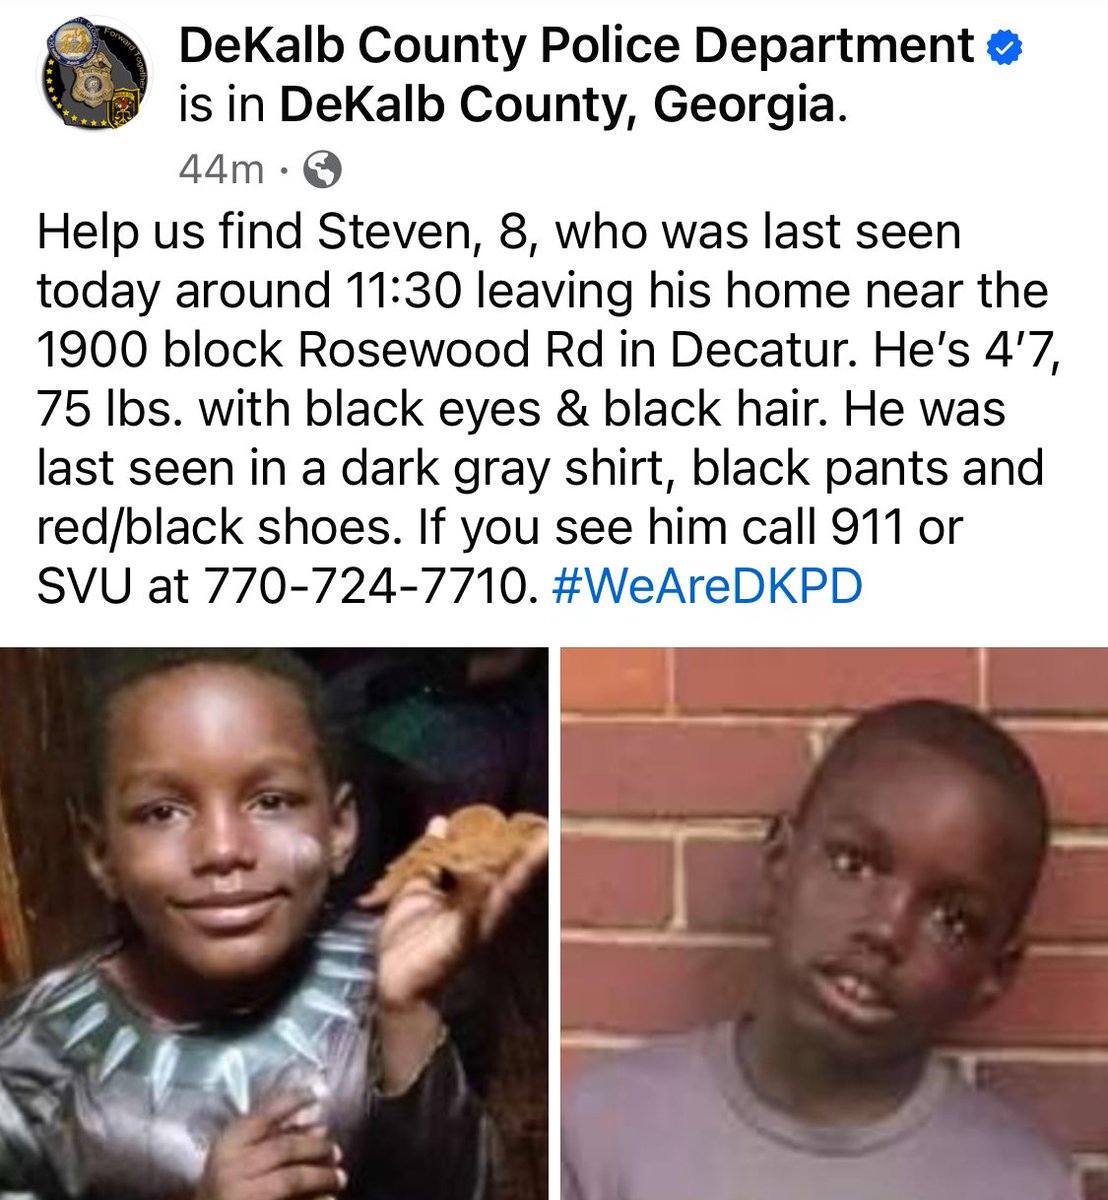 ‼️Missing Child ALERT🚨 Help us find Steven, 8 last seen at 11:30 near 1900 block Rosewood Rd @DeKalbCountyPD He’s 4’7, 75 lbs, blk eyes & blk hair in a DK gray shirt, blk pants,red/blk shoes. If you see him call 911 or 770-724-7710 #MissingKid #DeKalbCountyGA #Decatur #Atlanta